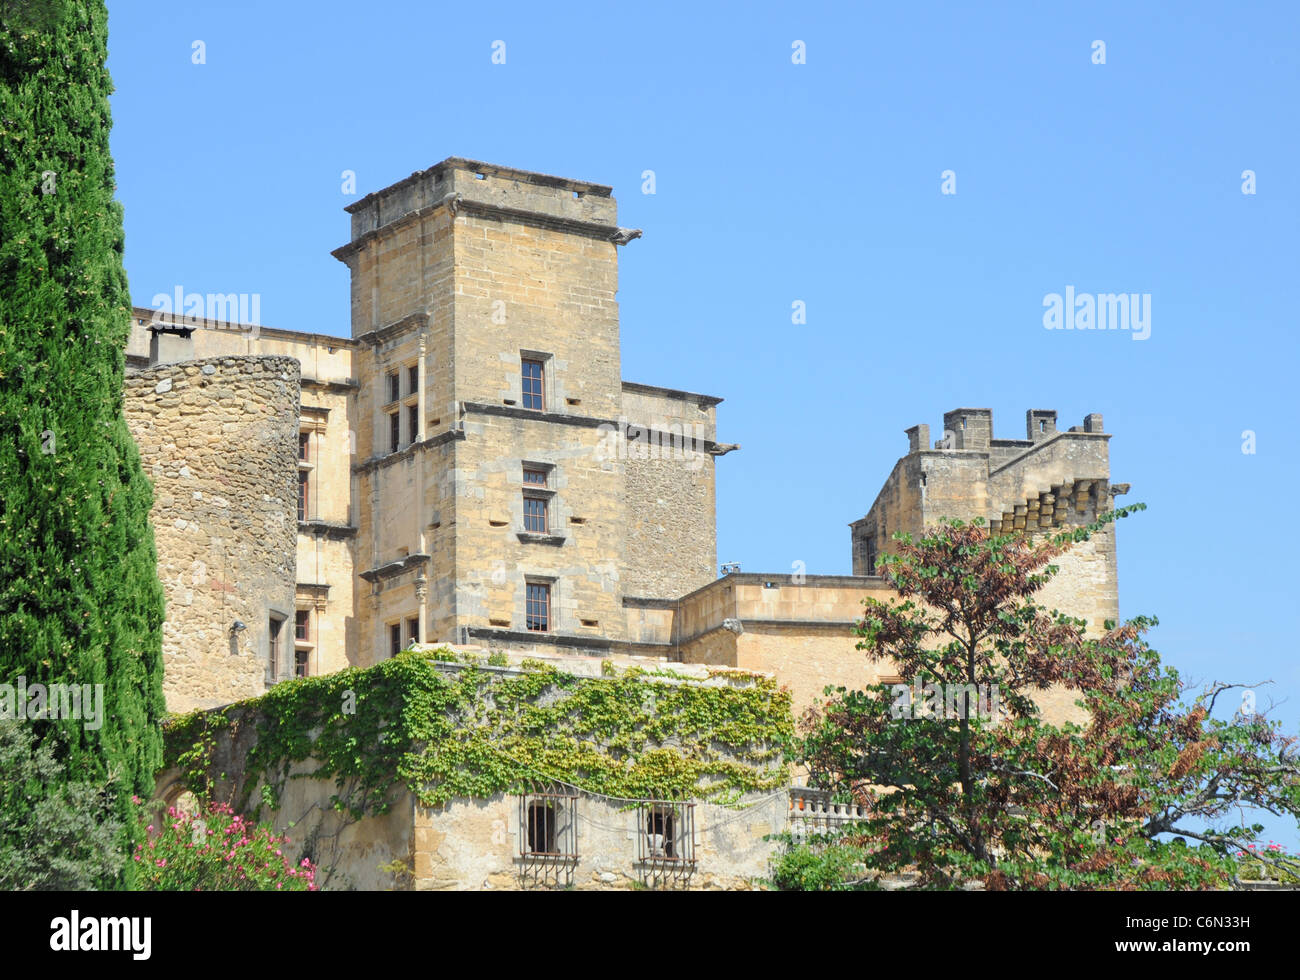 Château de Lourmarin - Castle in Lourmarin town, Vaucluse department, Provence region in France Stock Photo